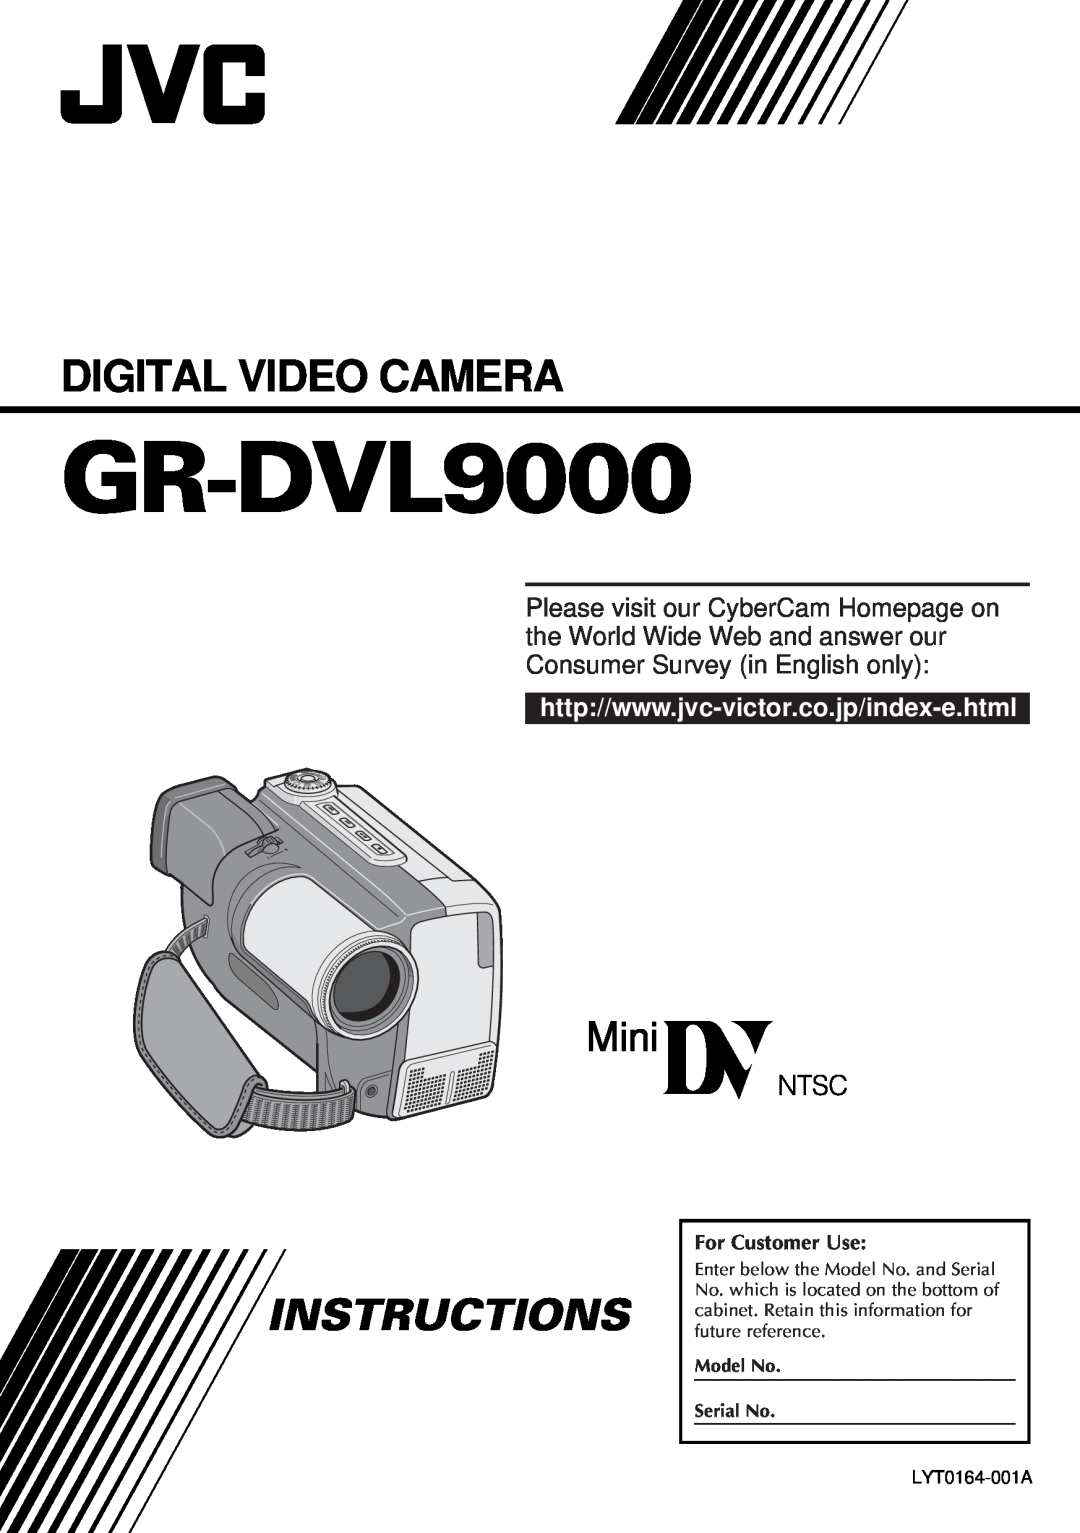 JVC GR-DVL9000 manual Digital Video Camera, Instructions, For Customer Use, LYT0164-001A 